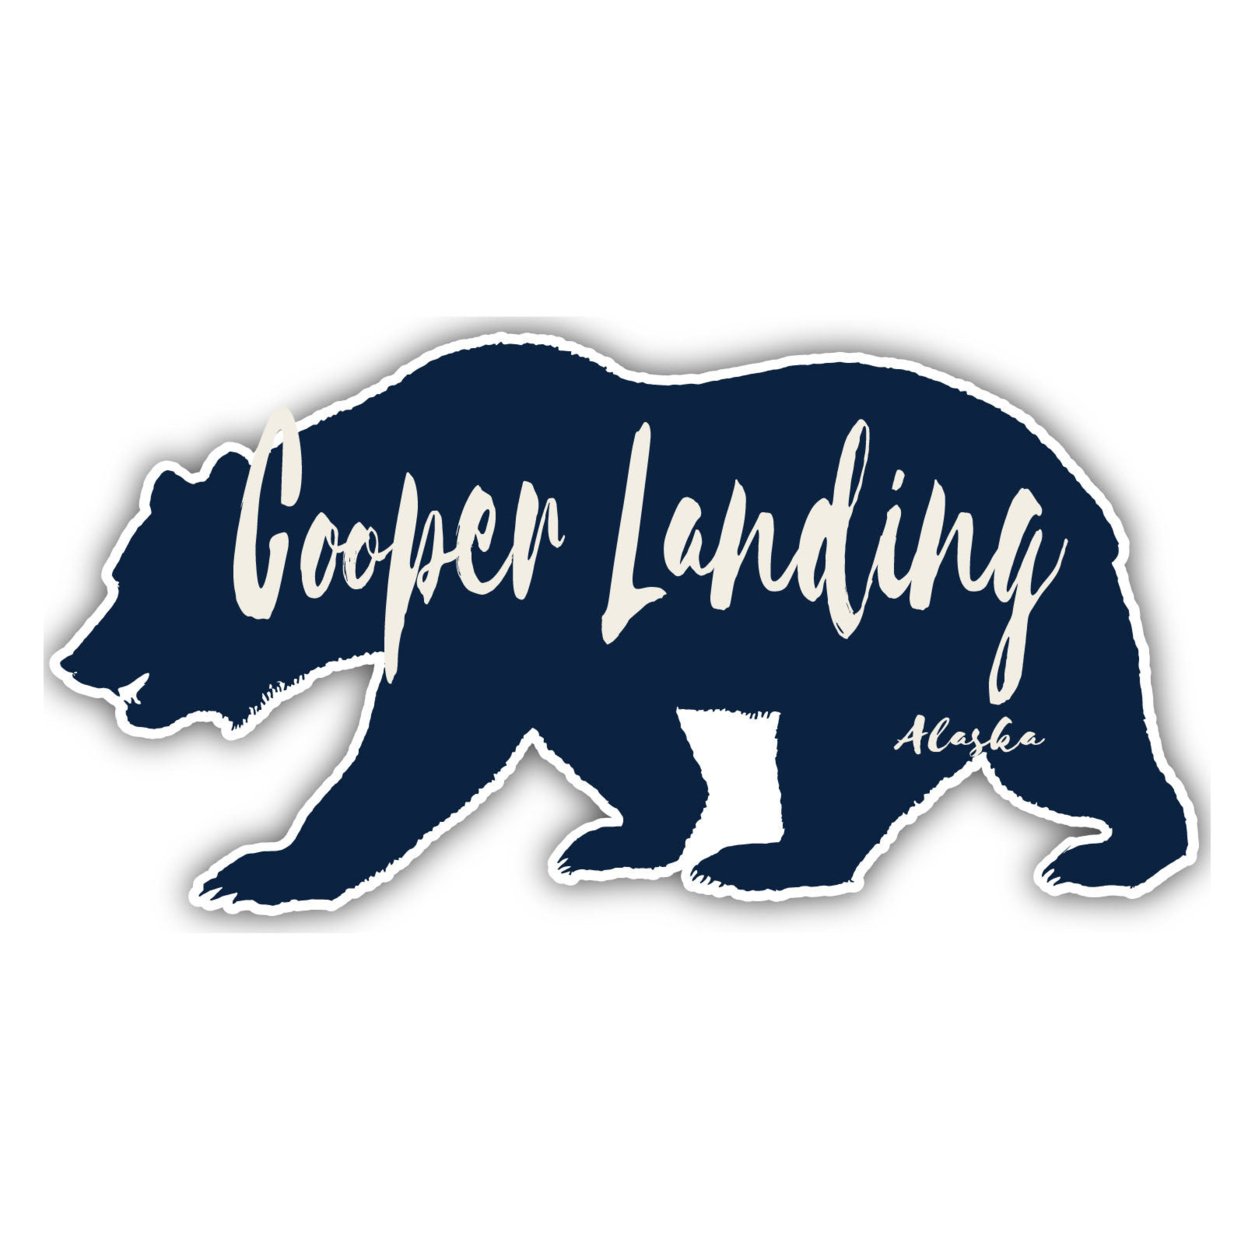 Cooper Landing Alaska Souvenir Decorative Stickers (Choose Theme And Size) - Single Unit, 12-Inch, Adventures Awaits